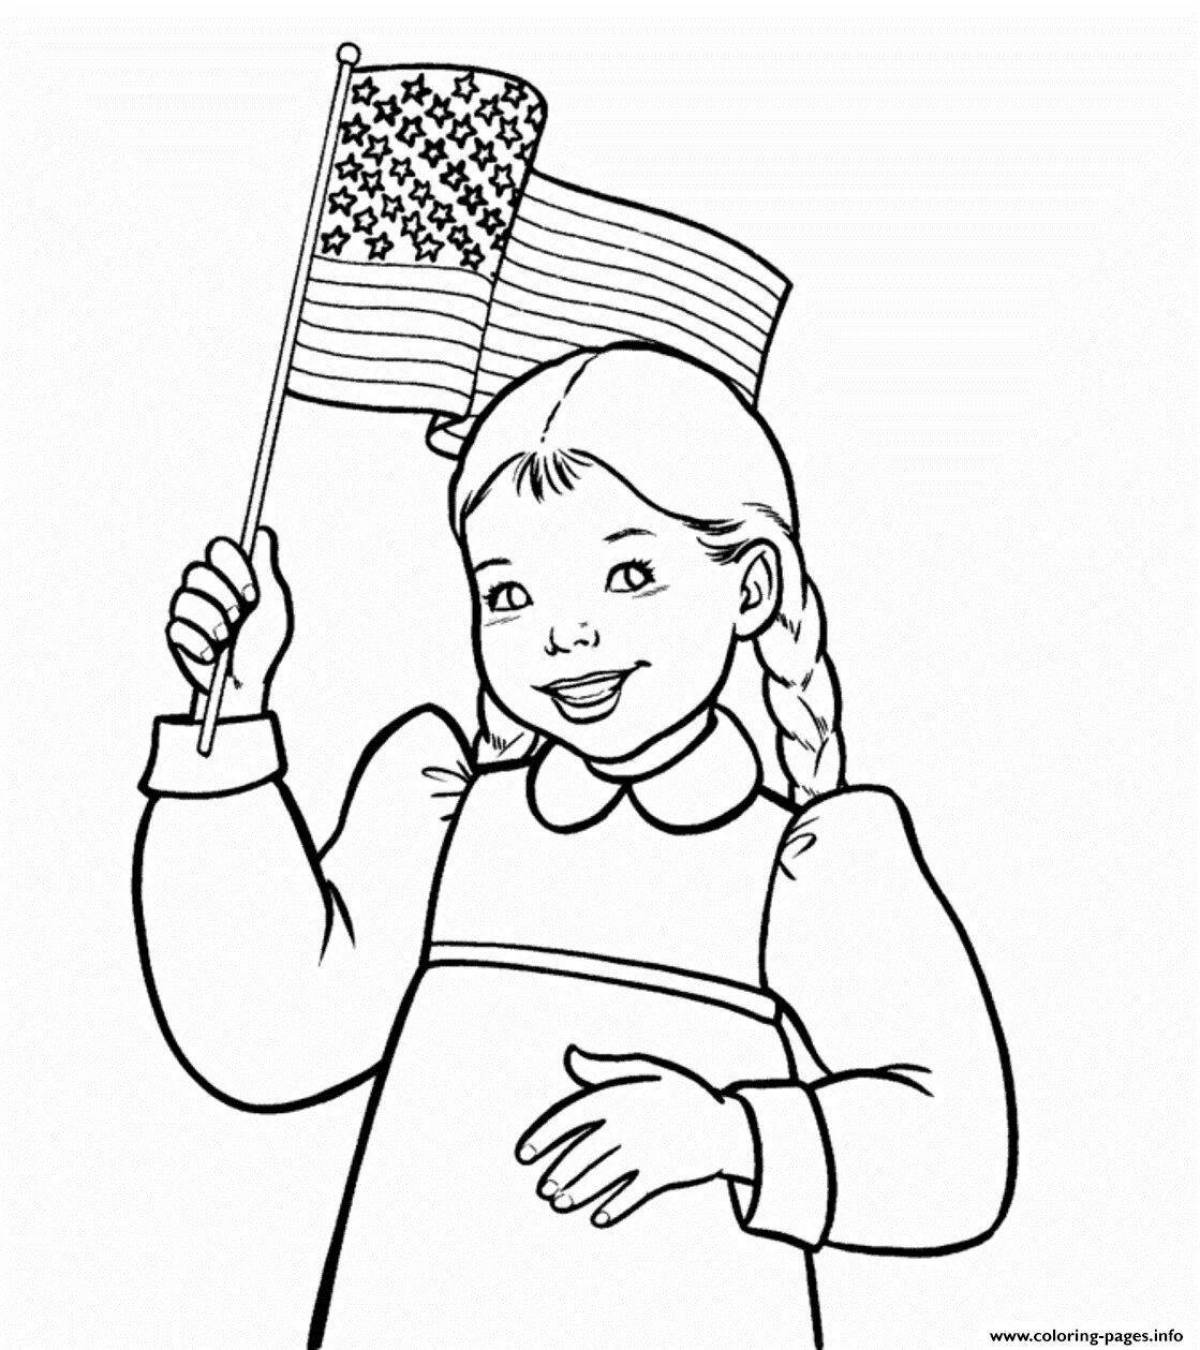 Bright patriotic coloring book for kids